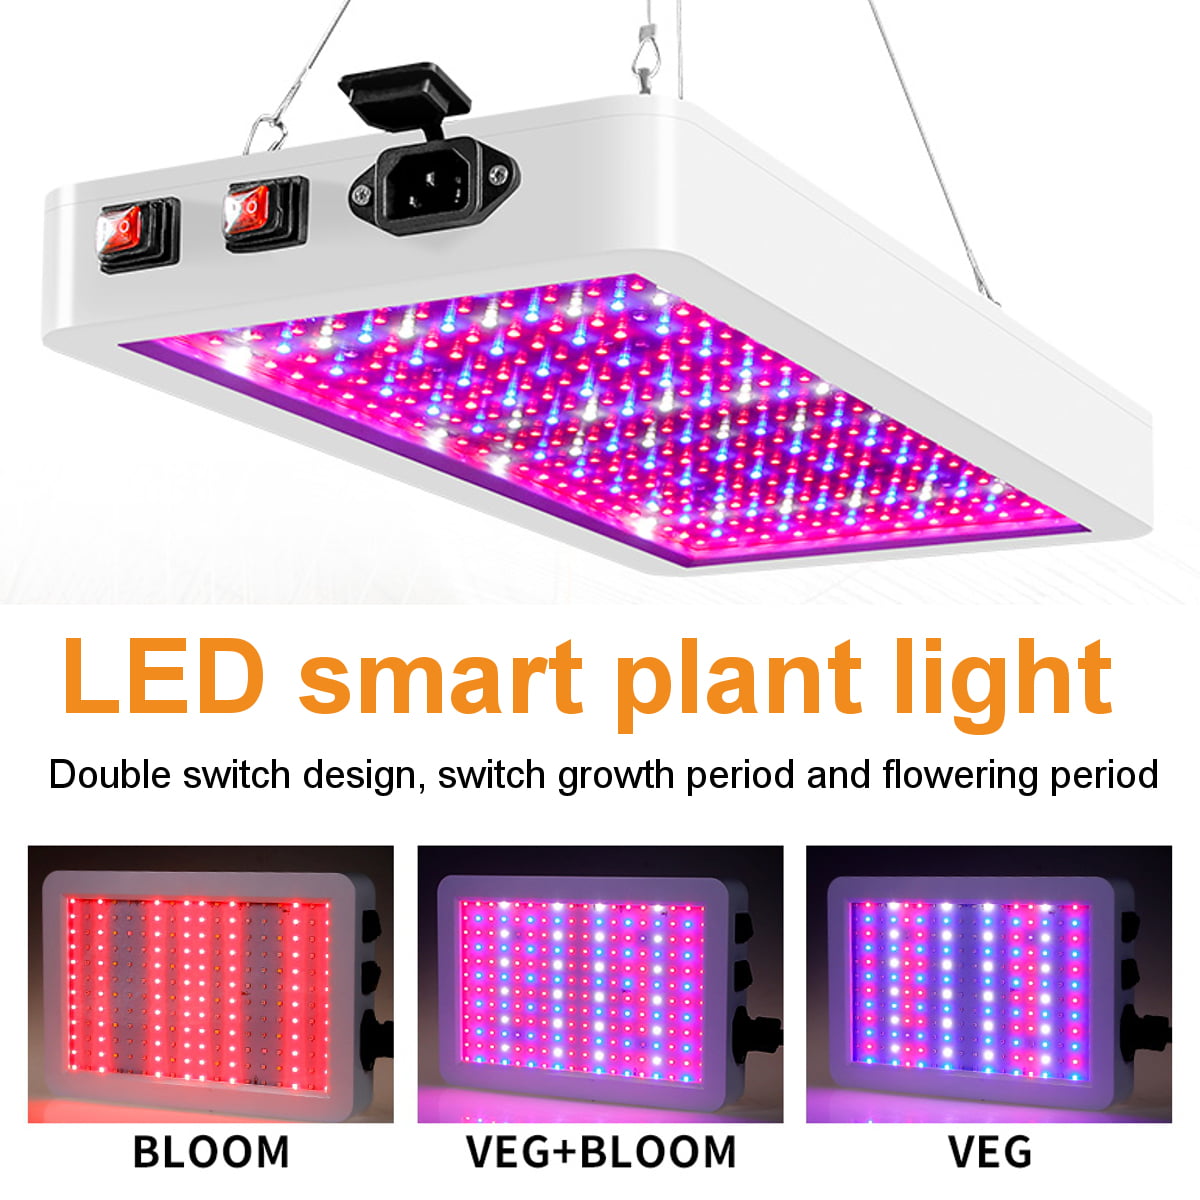 Details about   2000W Indoor LED Full Spectrum LED Plant Grow Light Hydroponics Veg Flower Lamp 